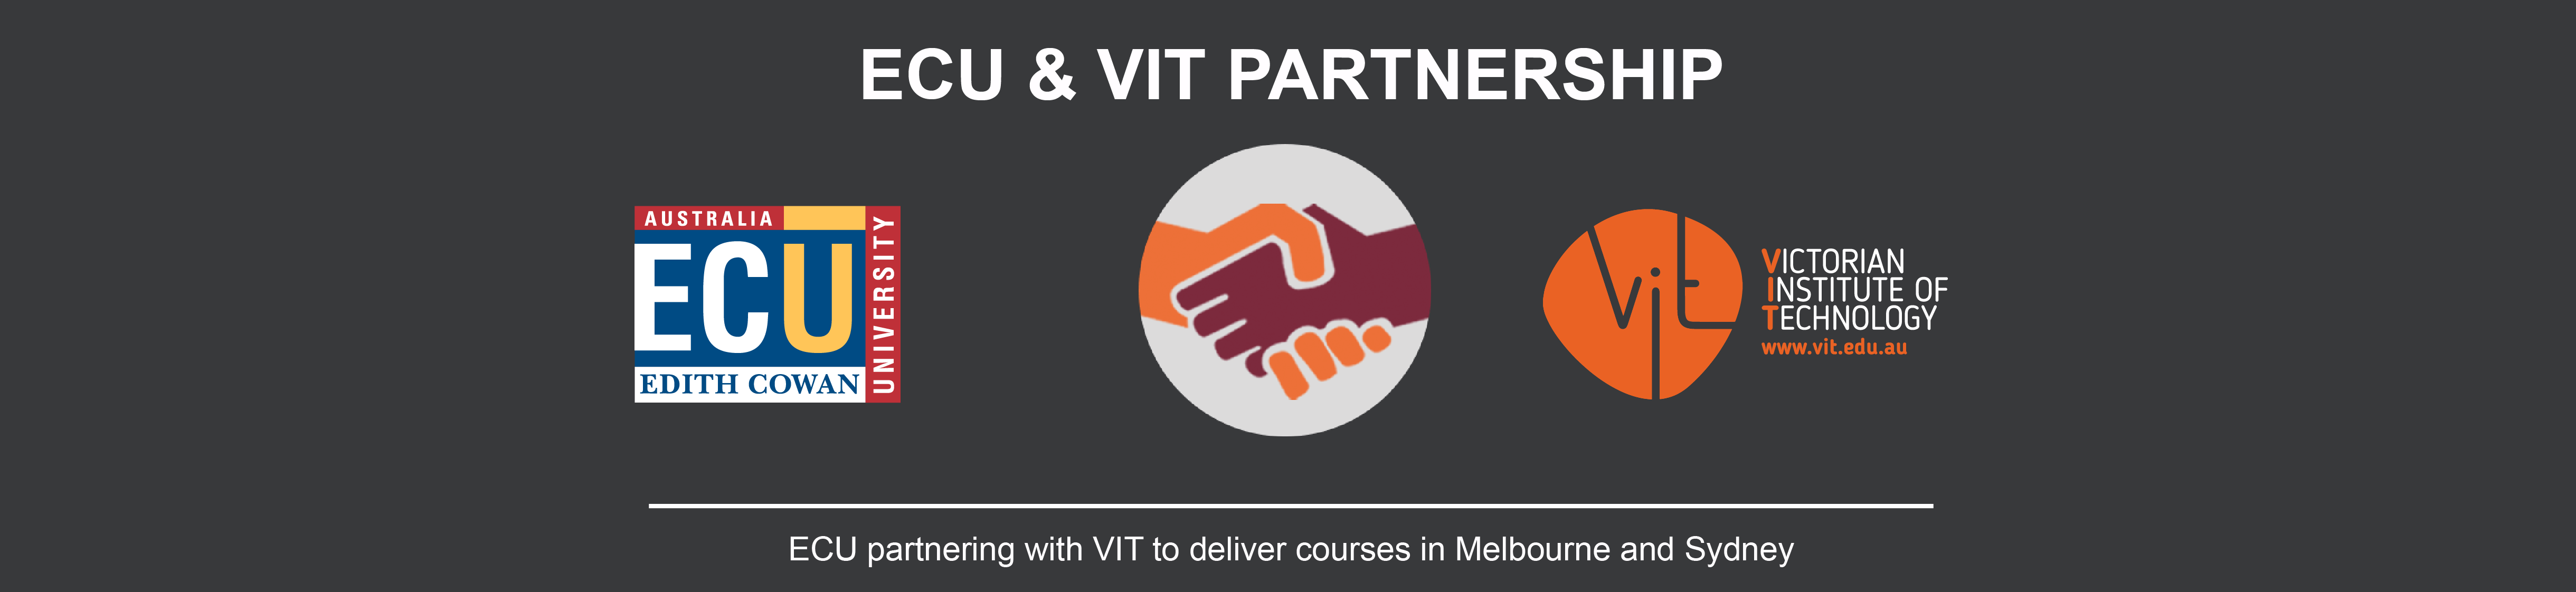 Ecu Vit Partnership Victorian Institute Of Technology